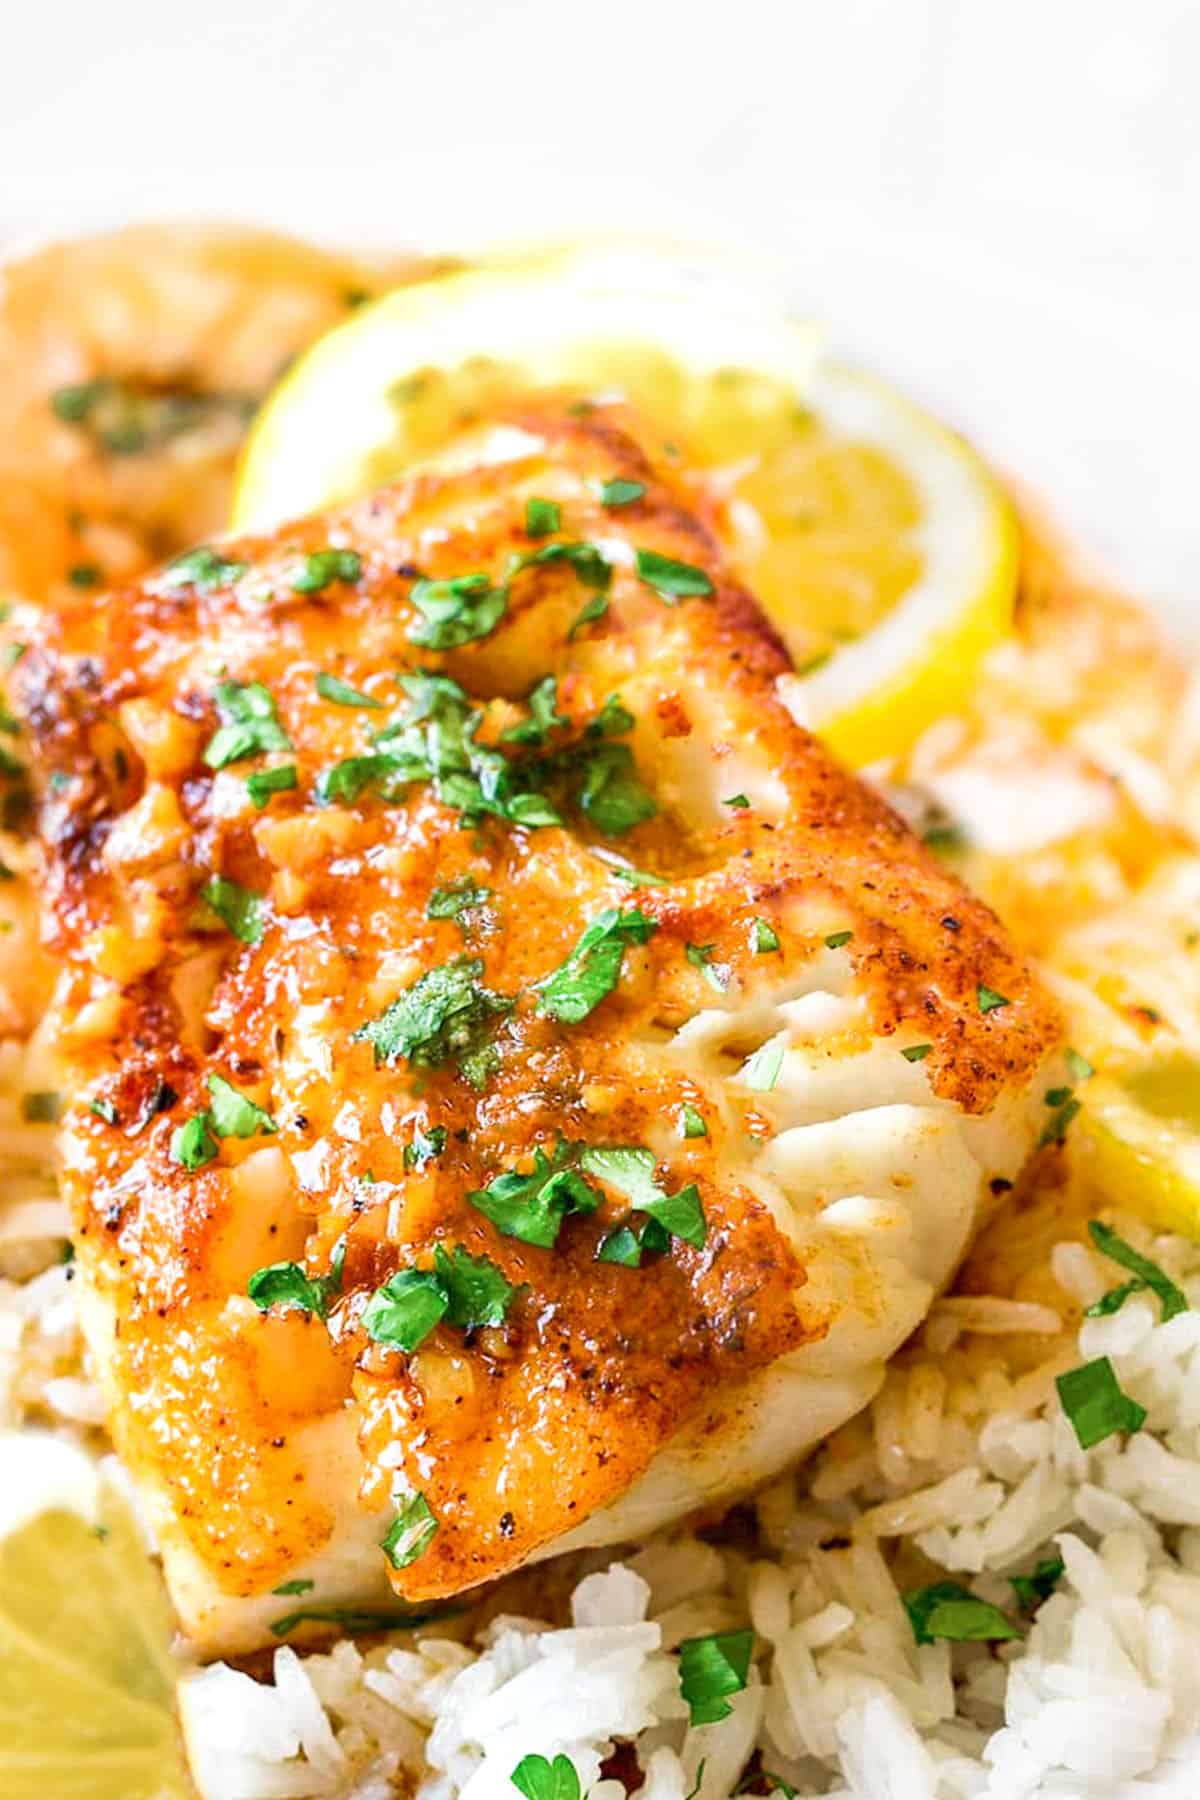 Homemade Fish Seasoning Recipe (For Cod) - The Dinner Bite